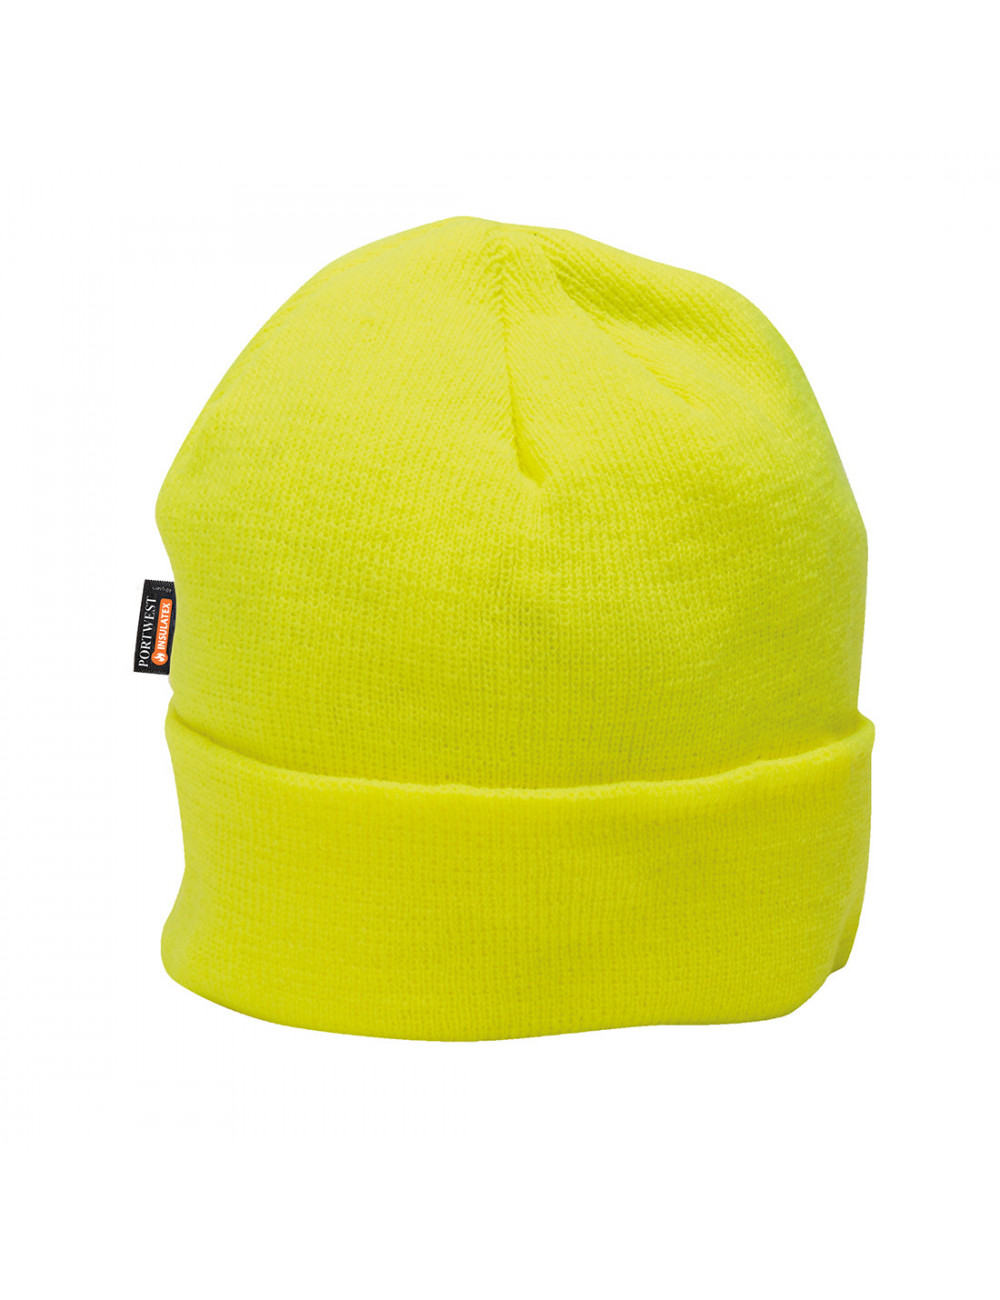 Insulatex winter hat yellow Portwest